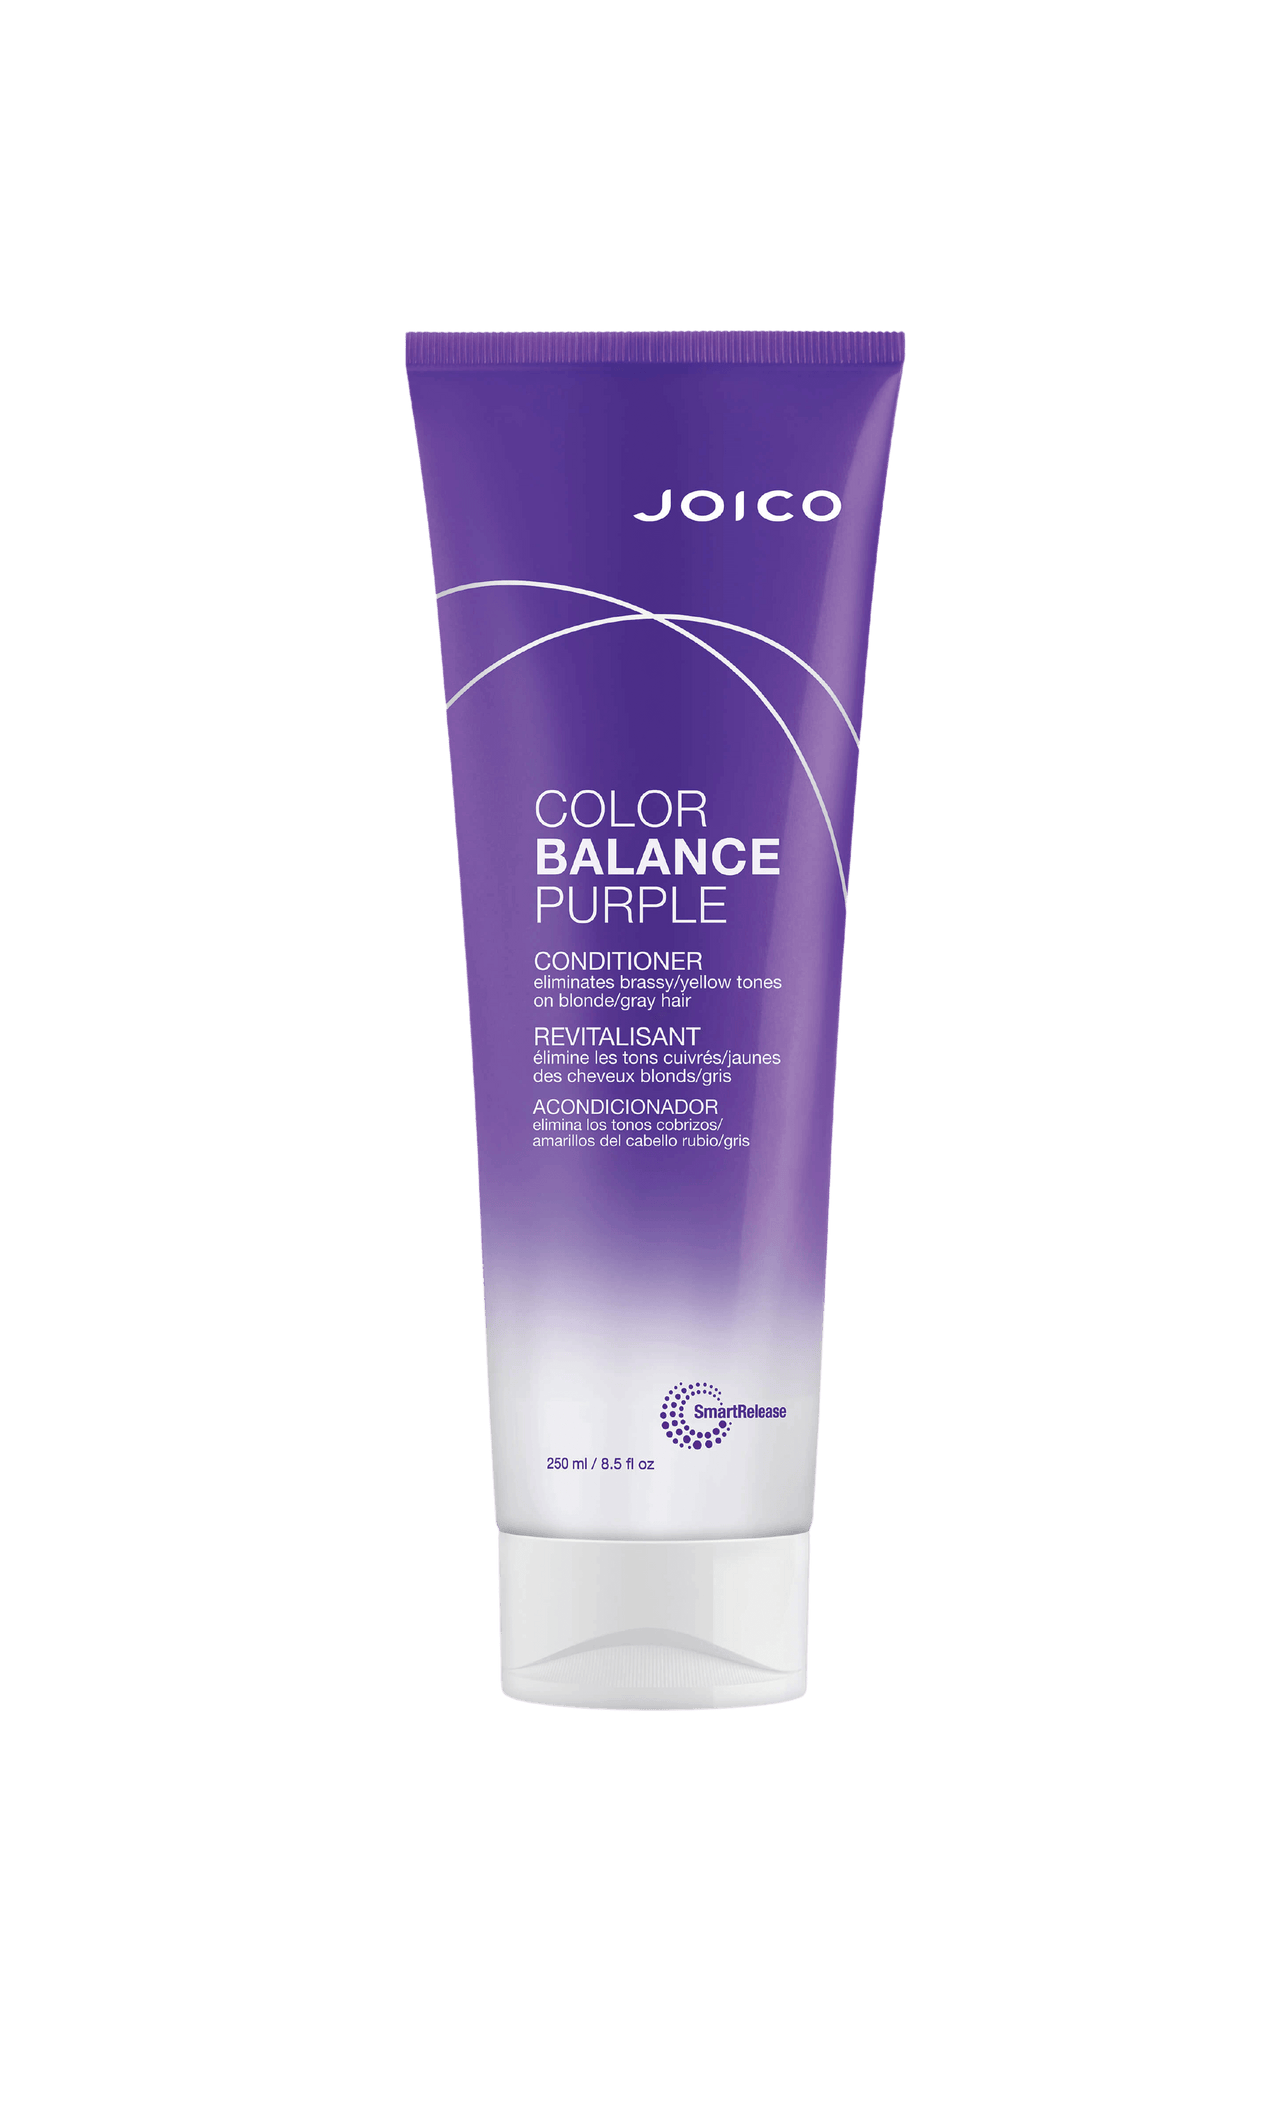 Joico Color Balance Purple Conditioner 250mL Tube